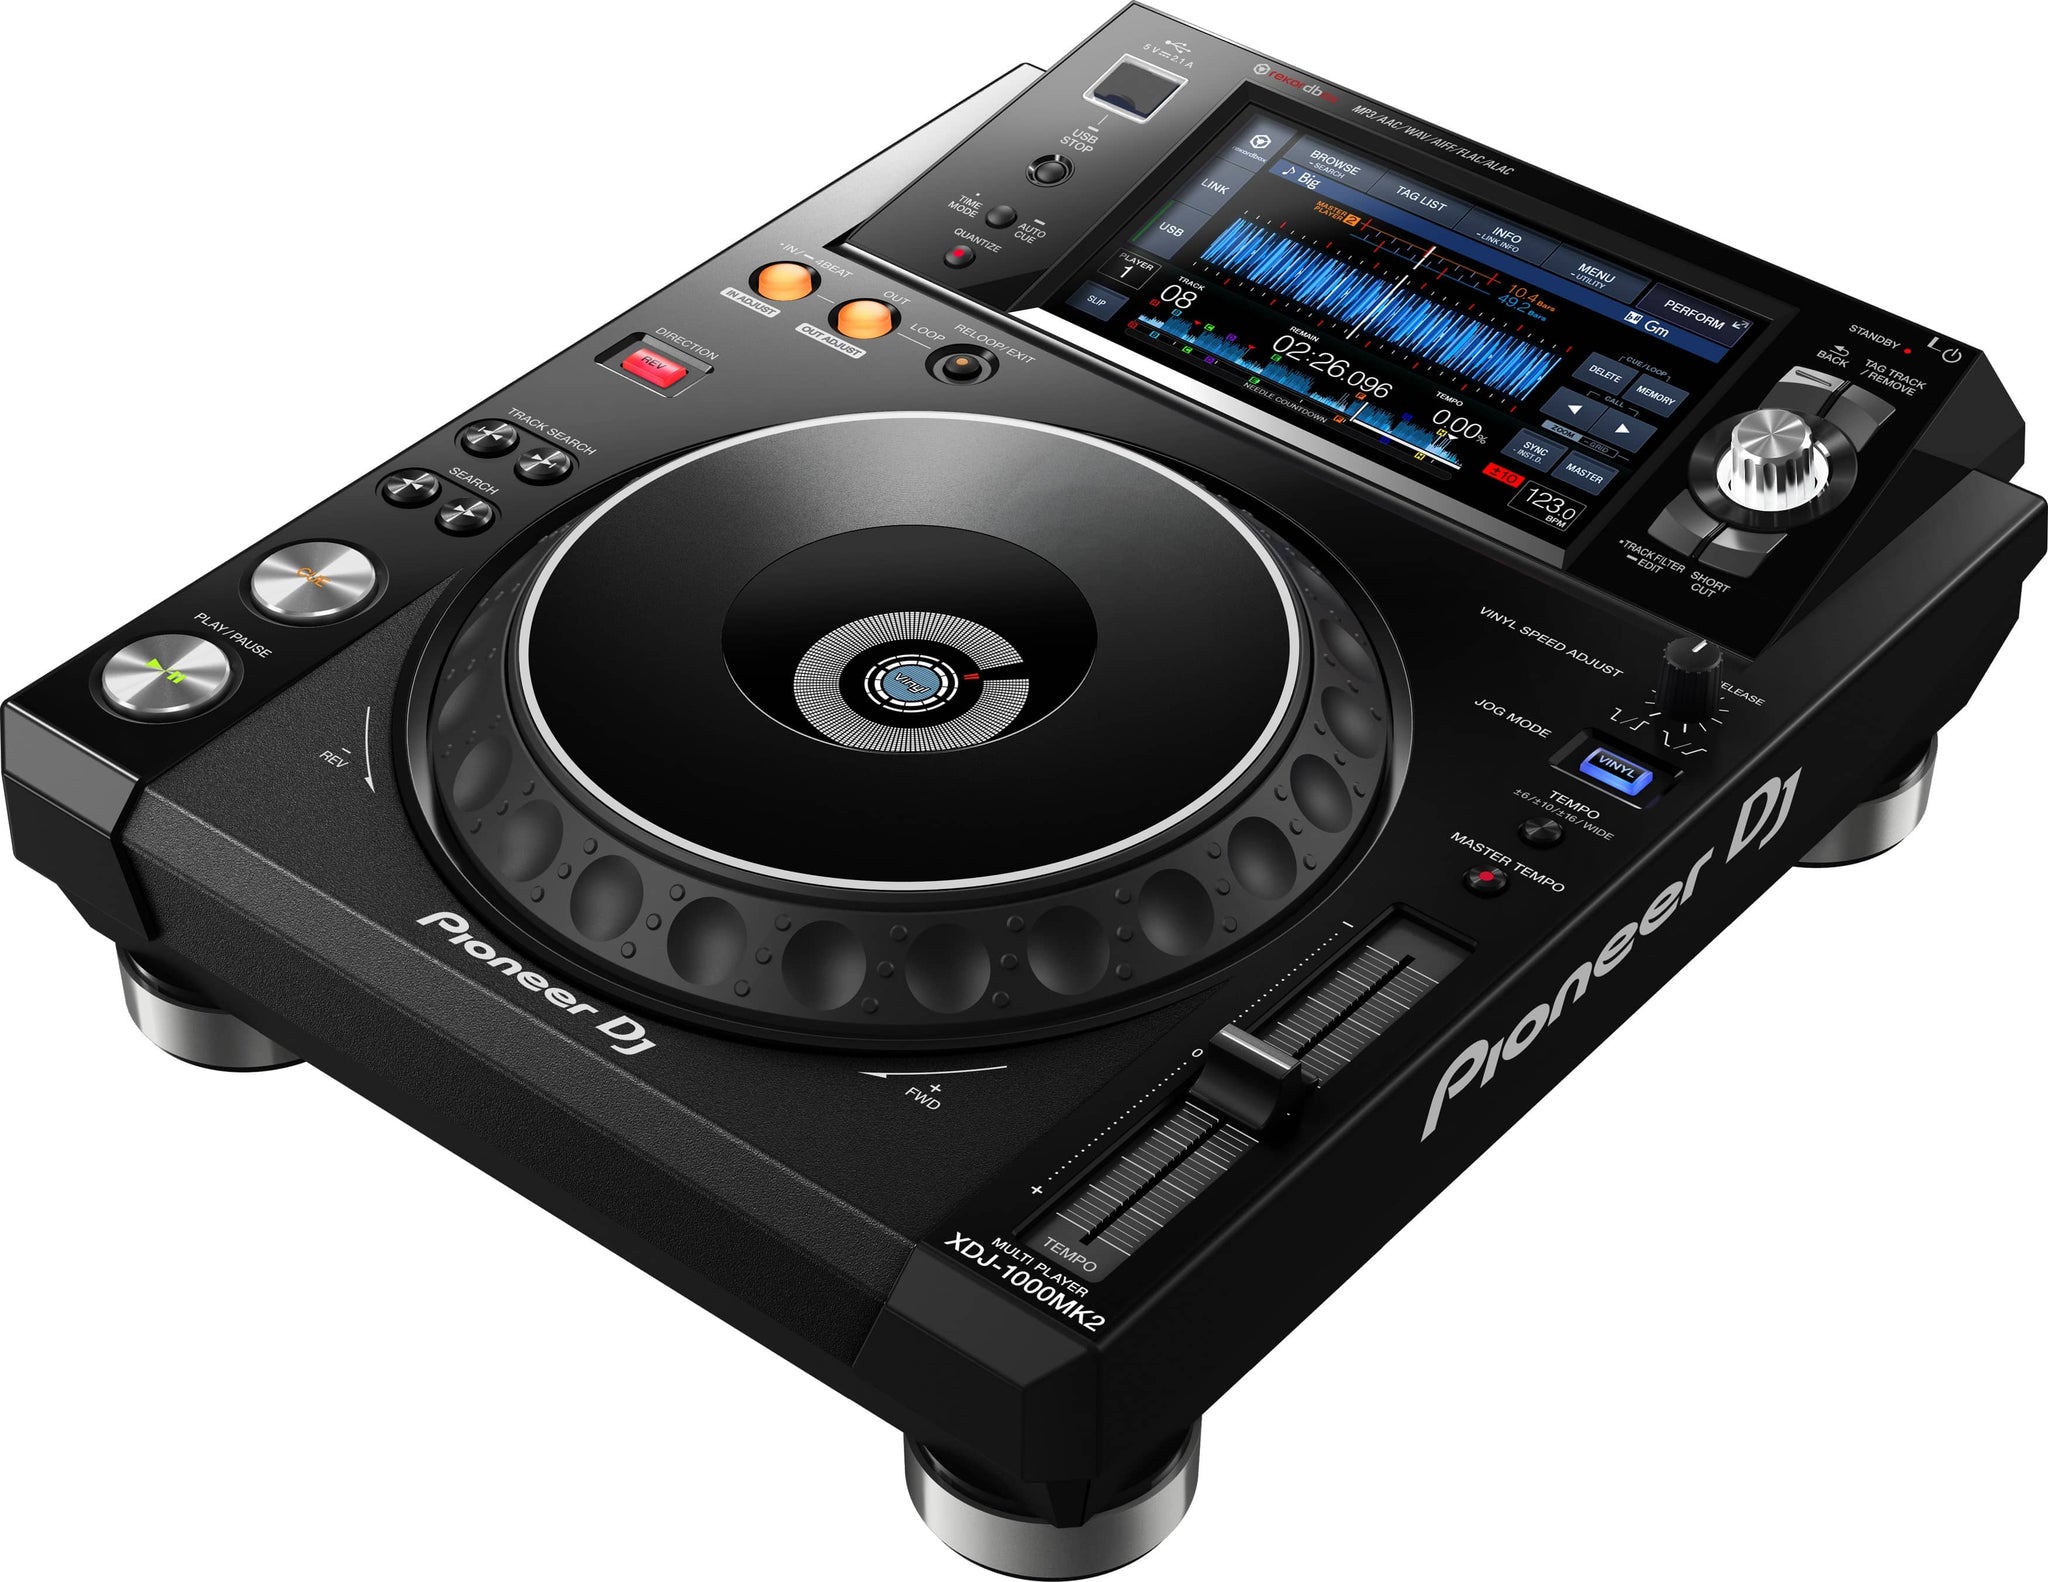 Pioneer DJ XDJ-1000 MK2